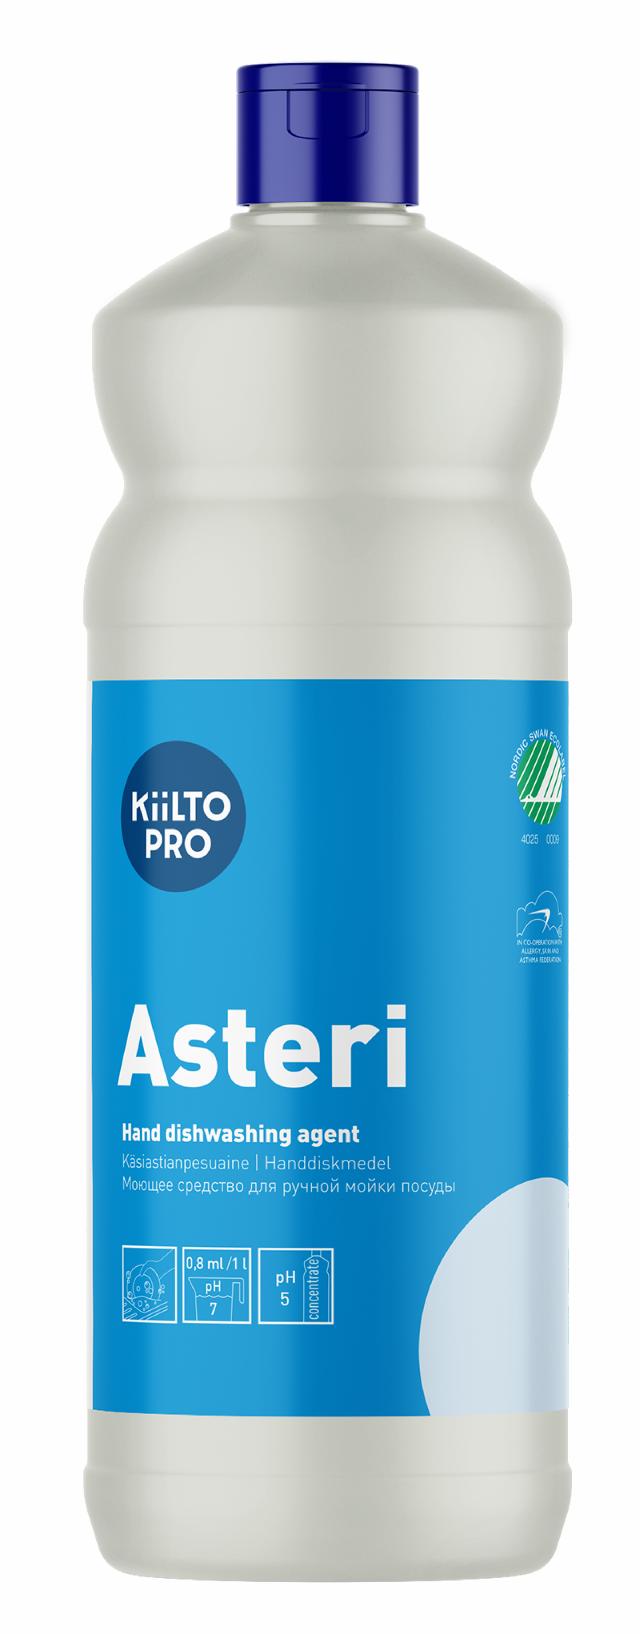 KiiltoPro Asteri 1 l